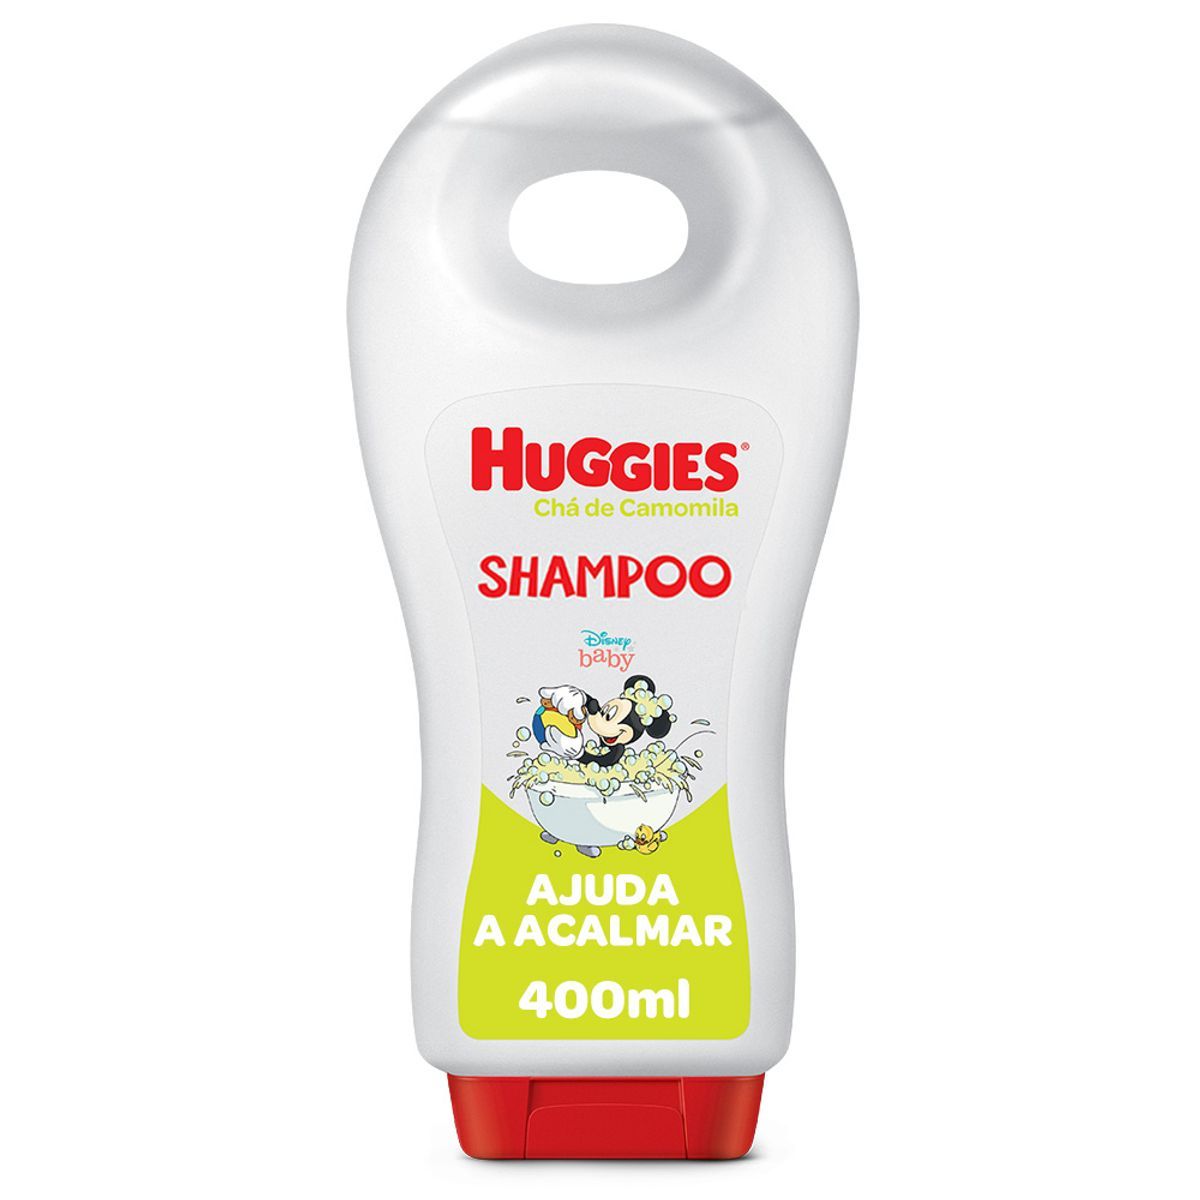 Shampoo Huggies Chá de Camomila - 400 ml image number 0